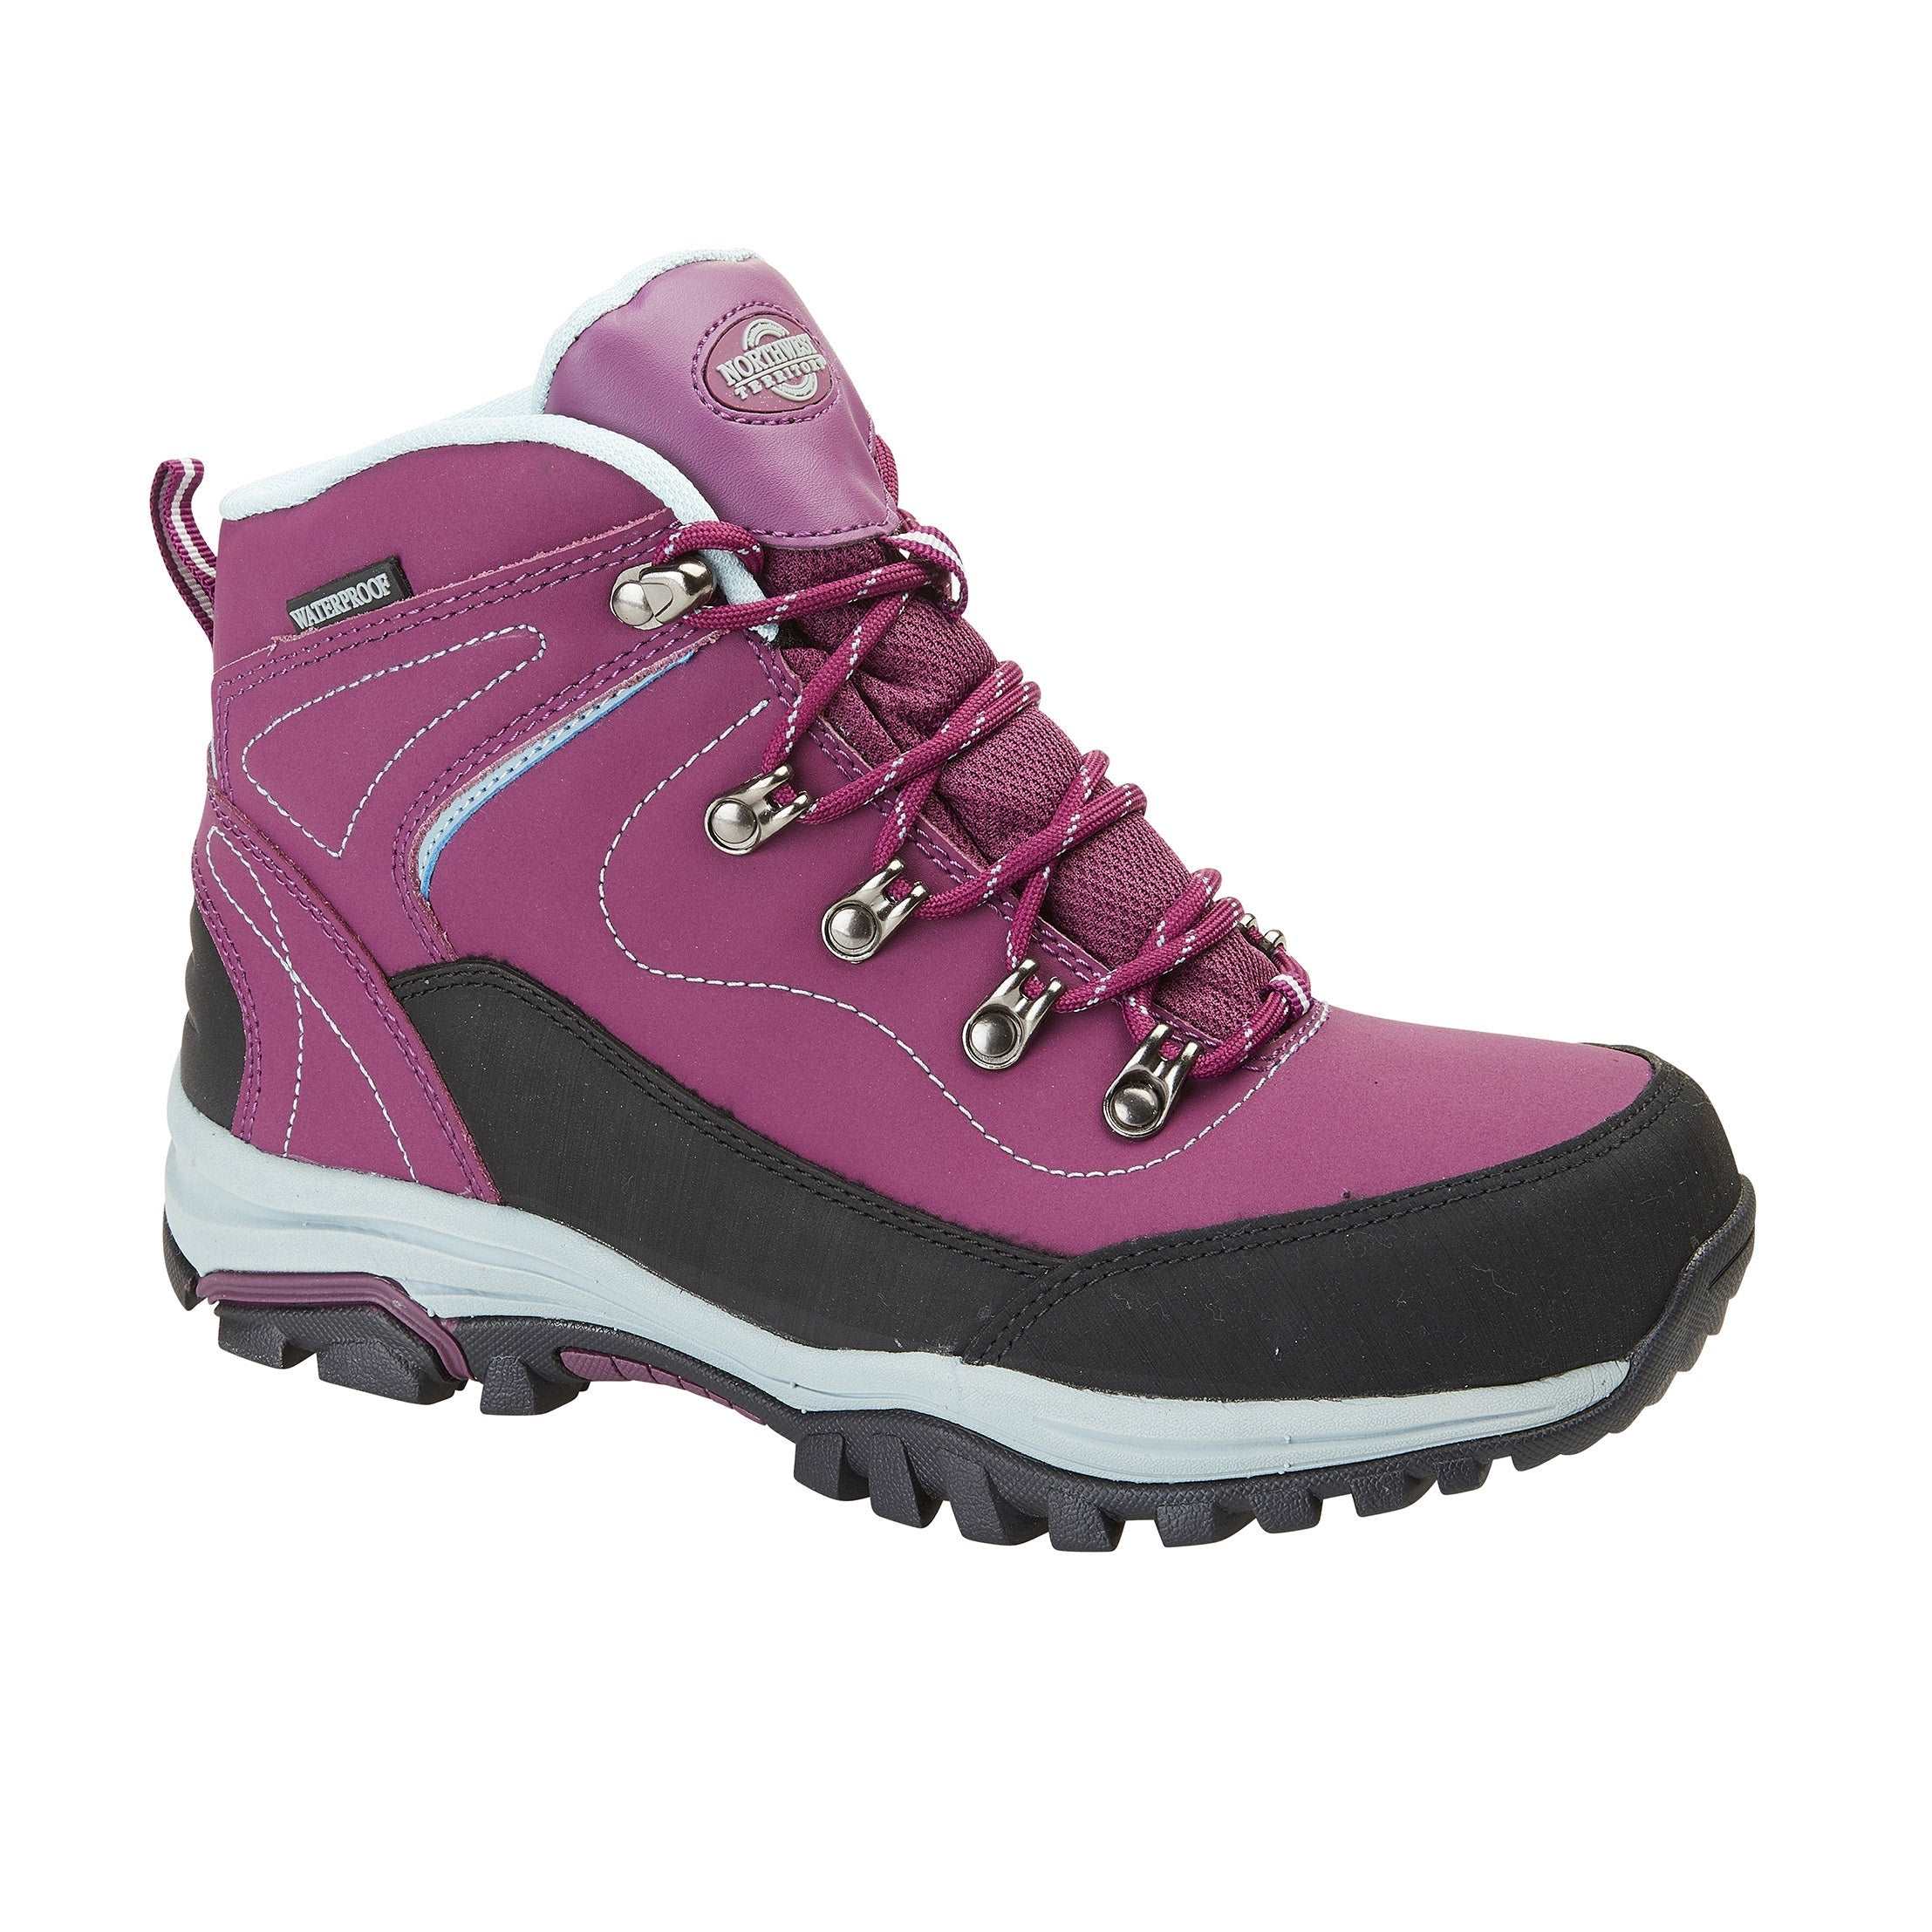 Texas Waterproof Walking And Hiking Boots